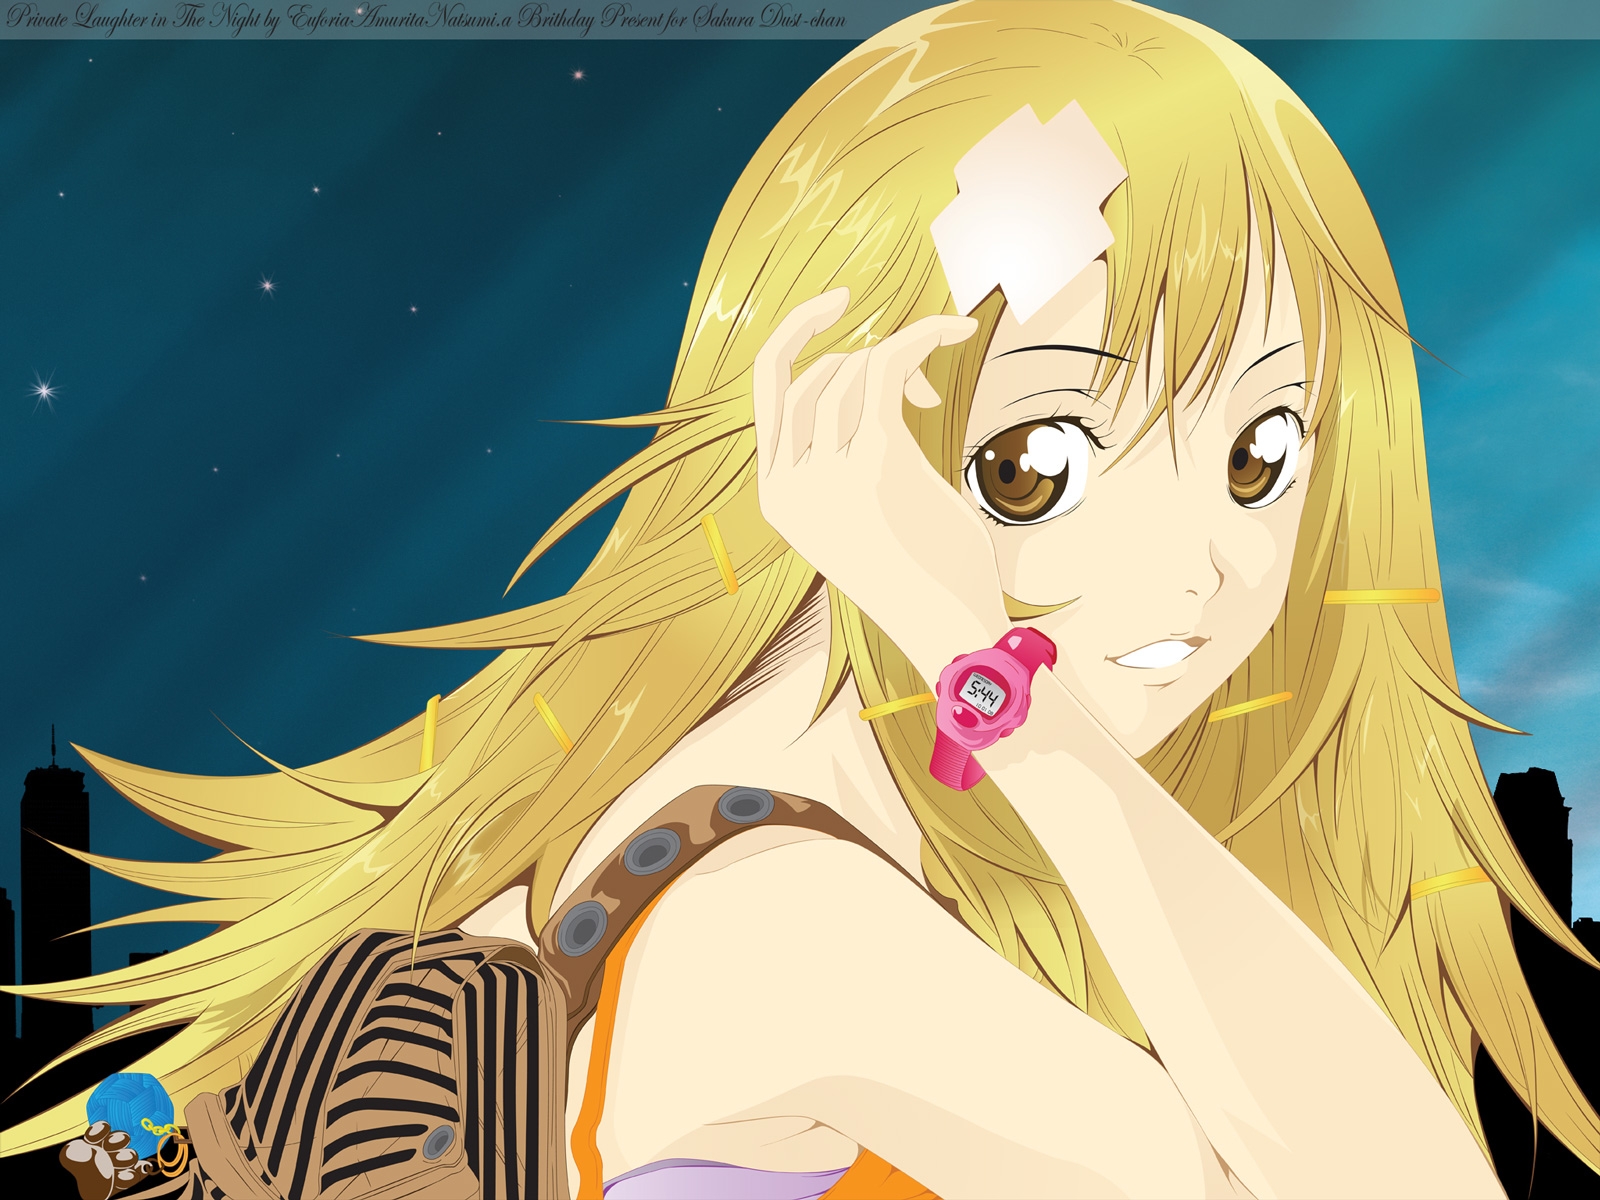  Download  Kumpulan Fan Art dan Wallpaper  Anime  Keren  HD 